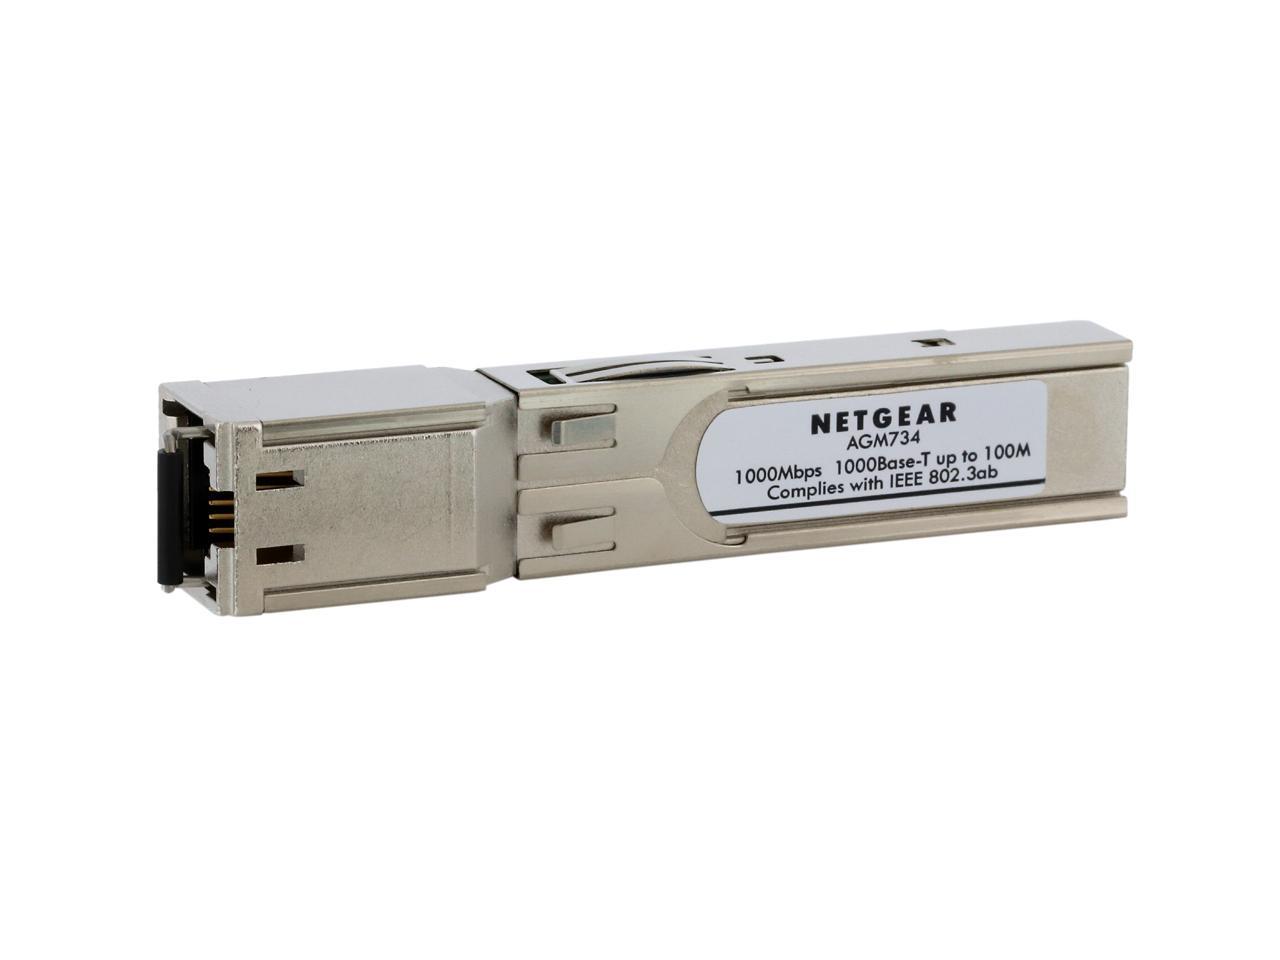 SFP to RJ45 Copper Module up to 100m 1000BASE-T Mini-GBIC Gigabit Transceiver for Netgear AGM734-10000S